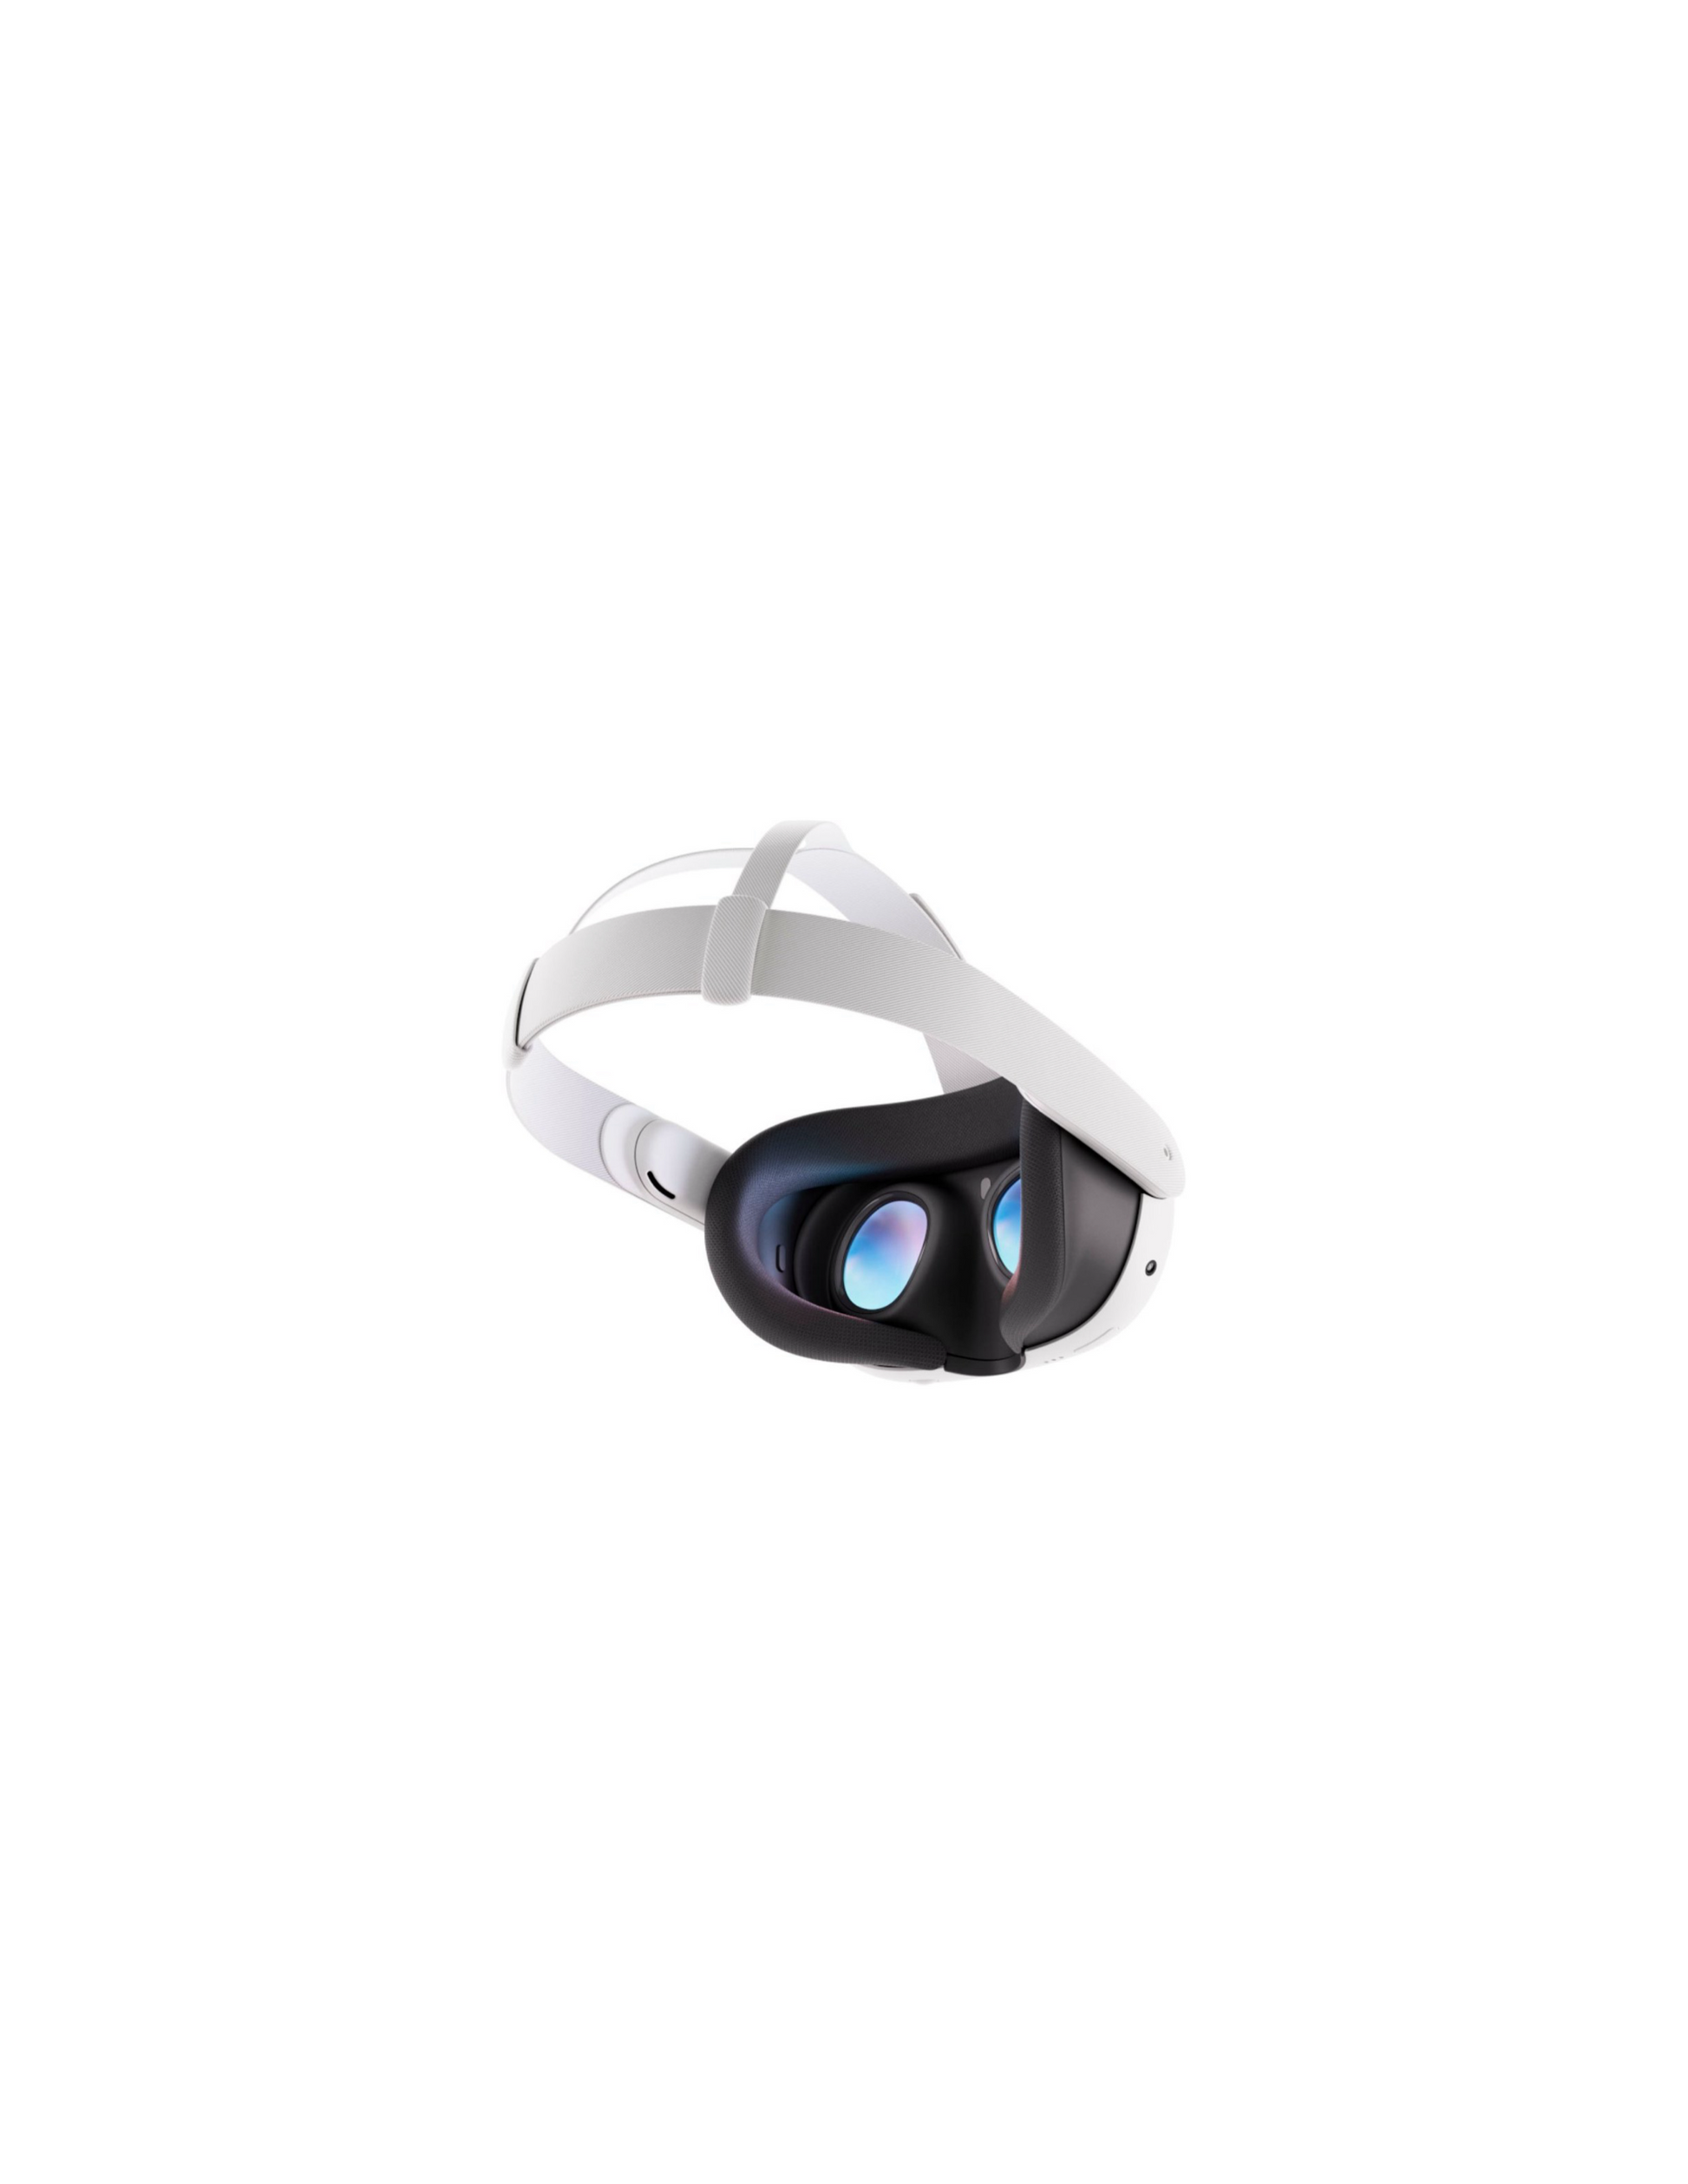 Meta Quest 3 VR Headset 128GB | GameStop